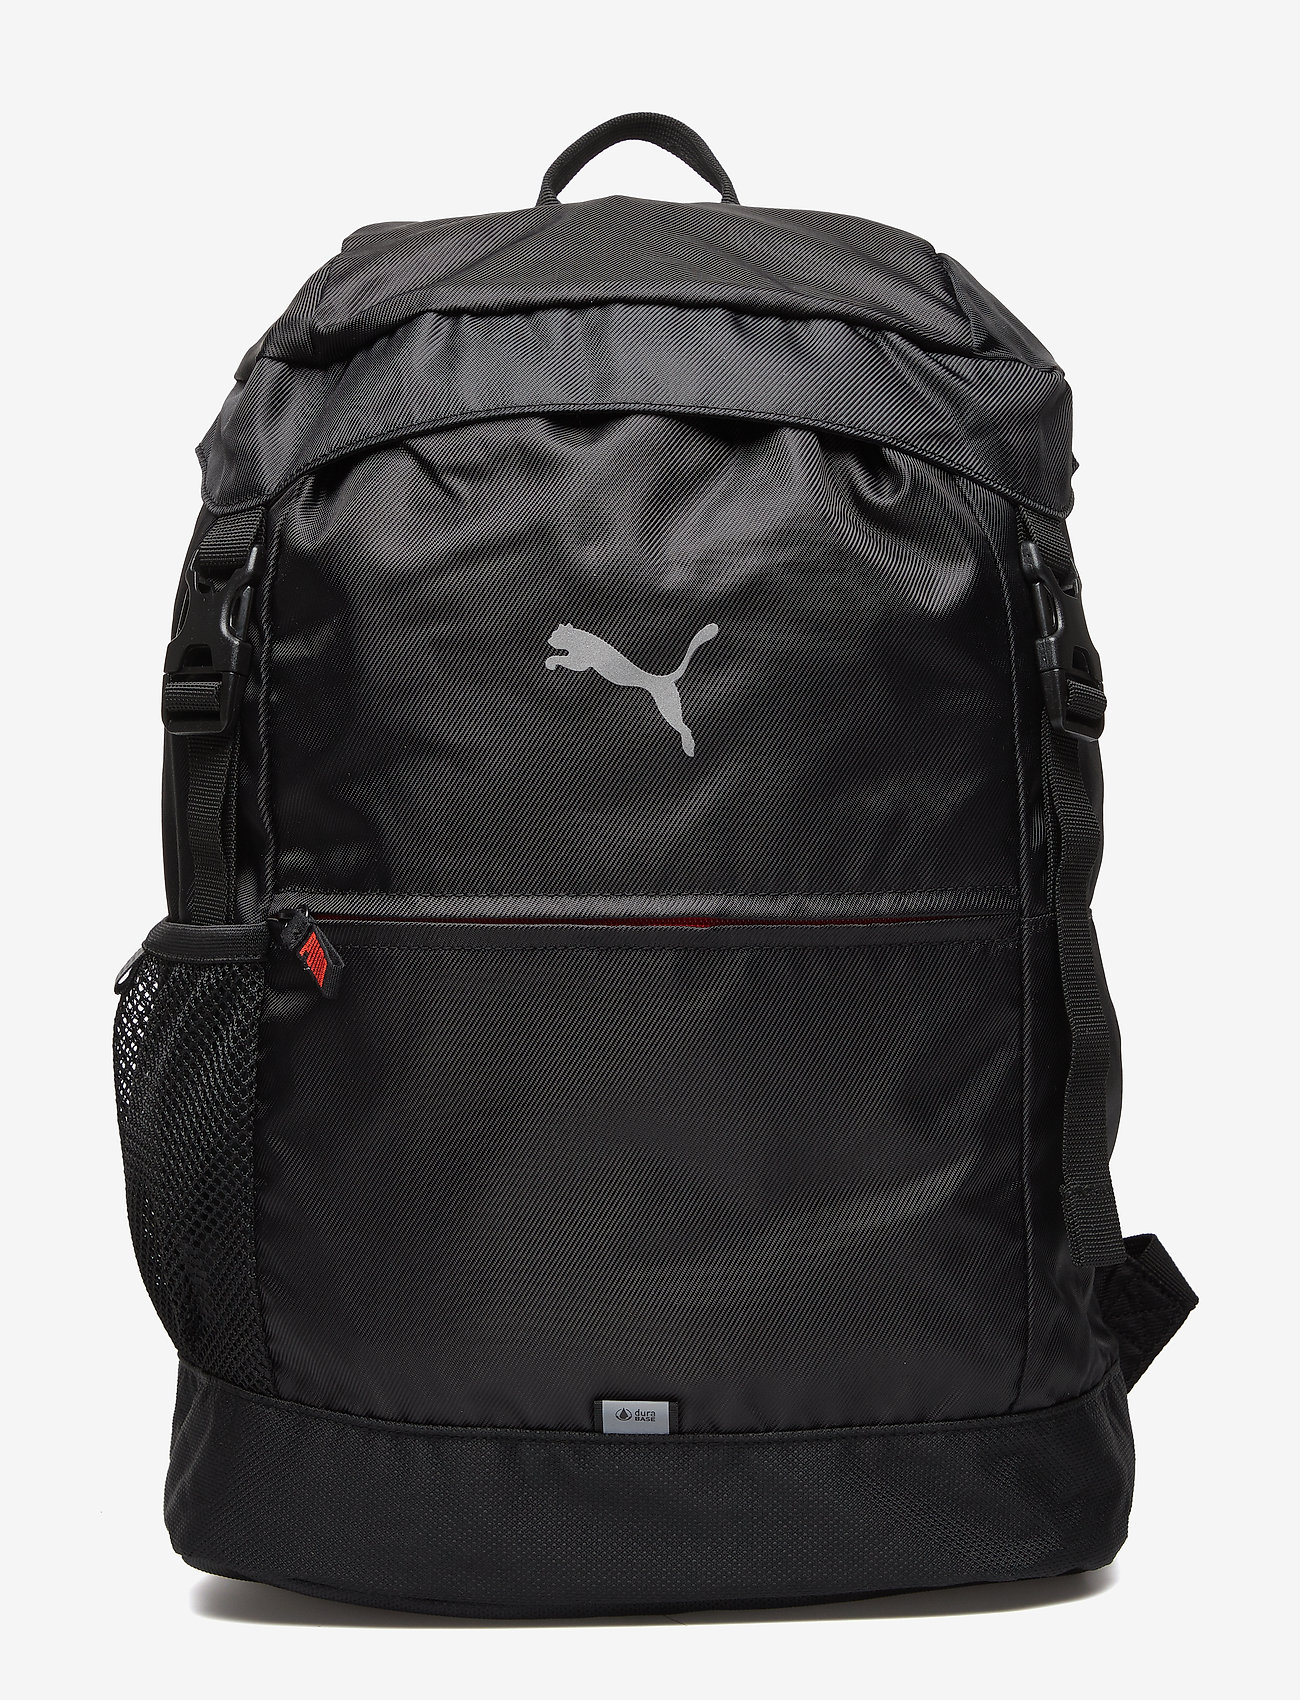 Backpack (Puma Black) (33 €) - PUMA 